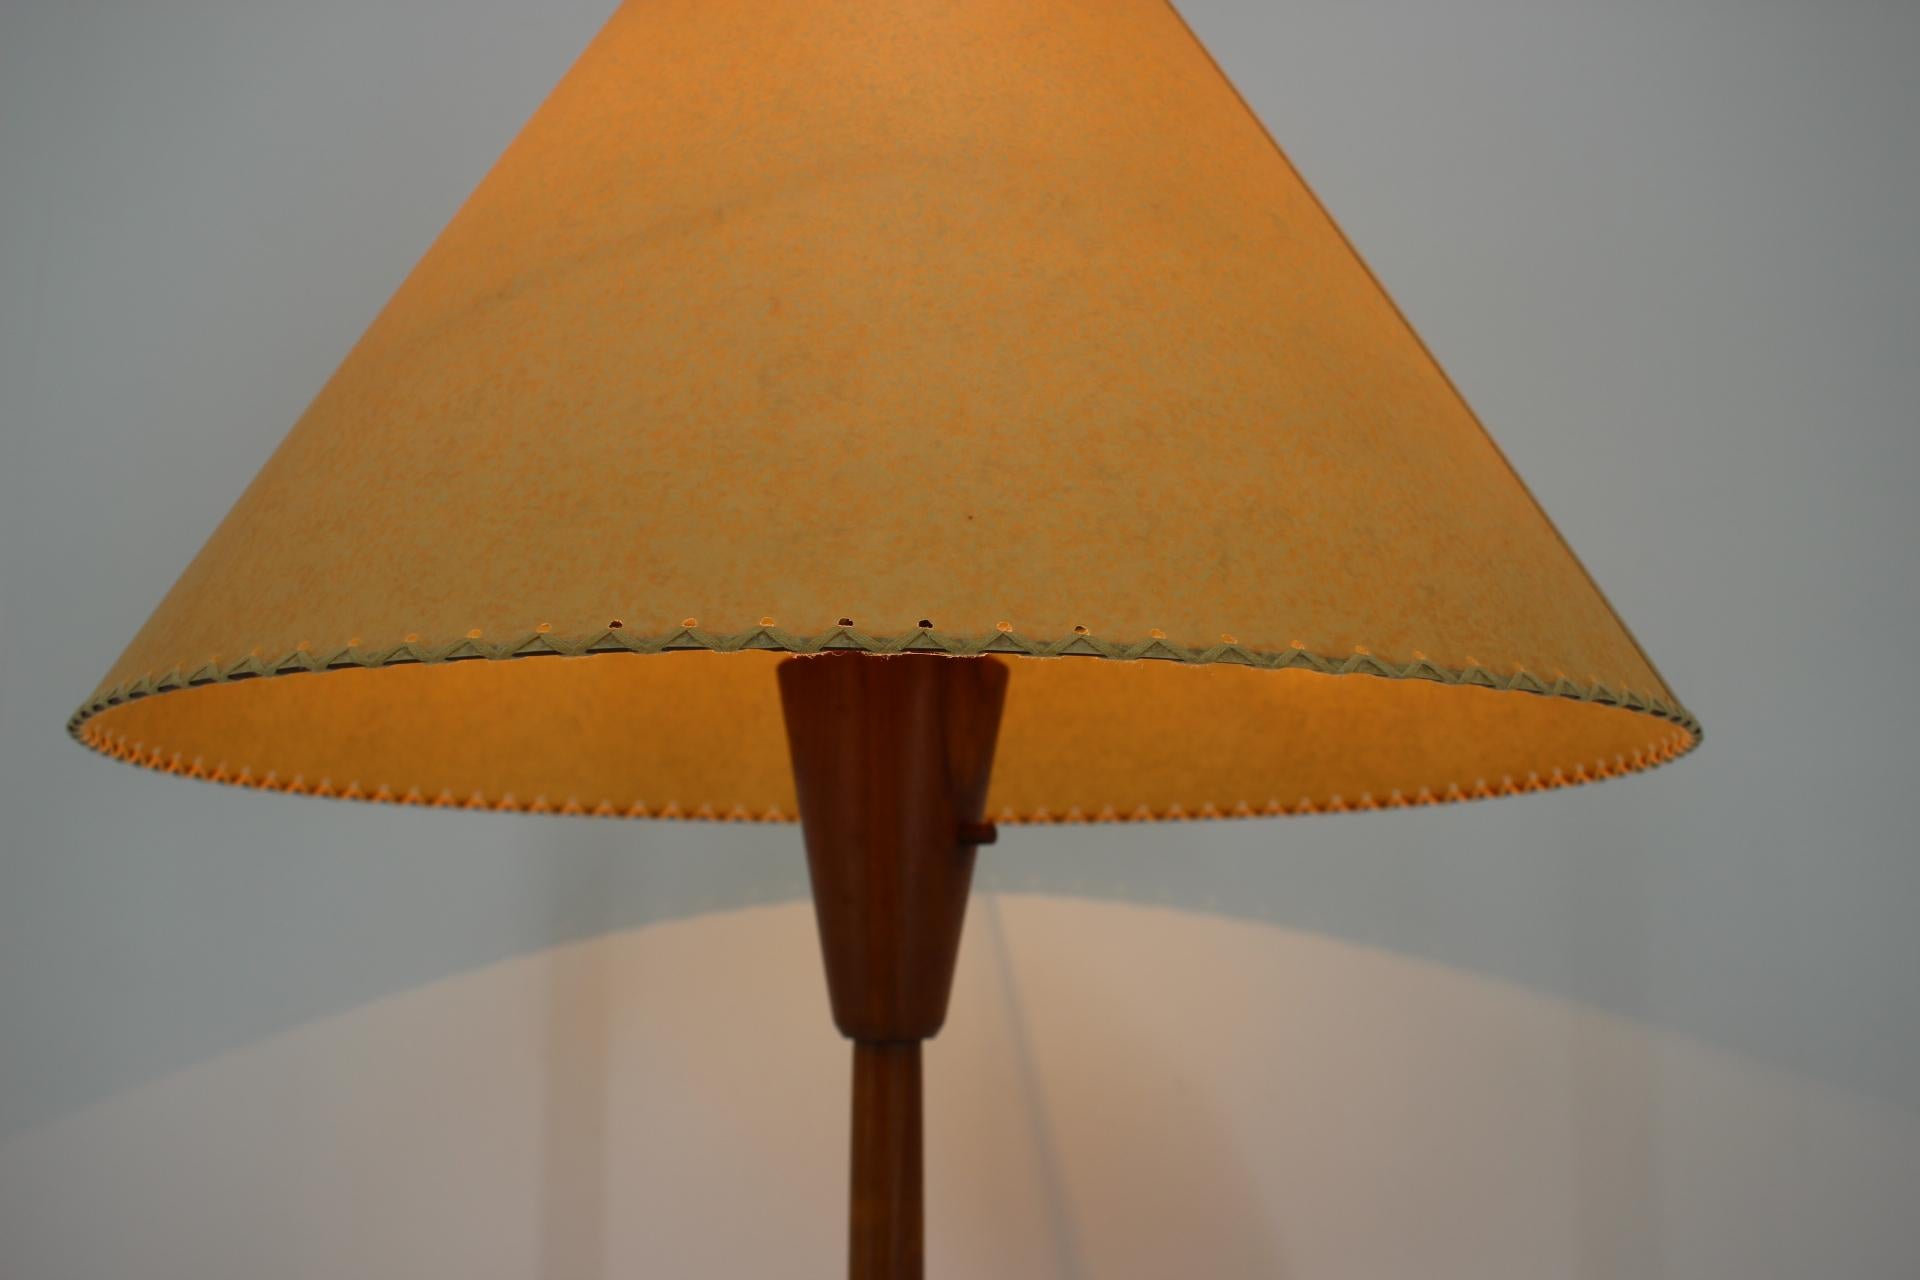 Czech Midcentury Wooden Floor Lamp by Jan Kalous for ULUV / 1950s, Restored For Sale